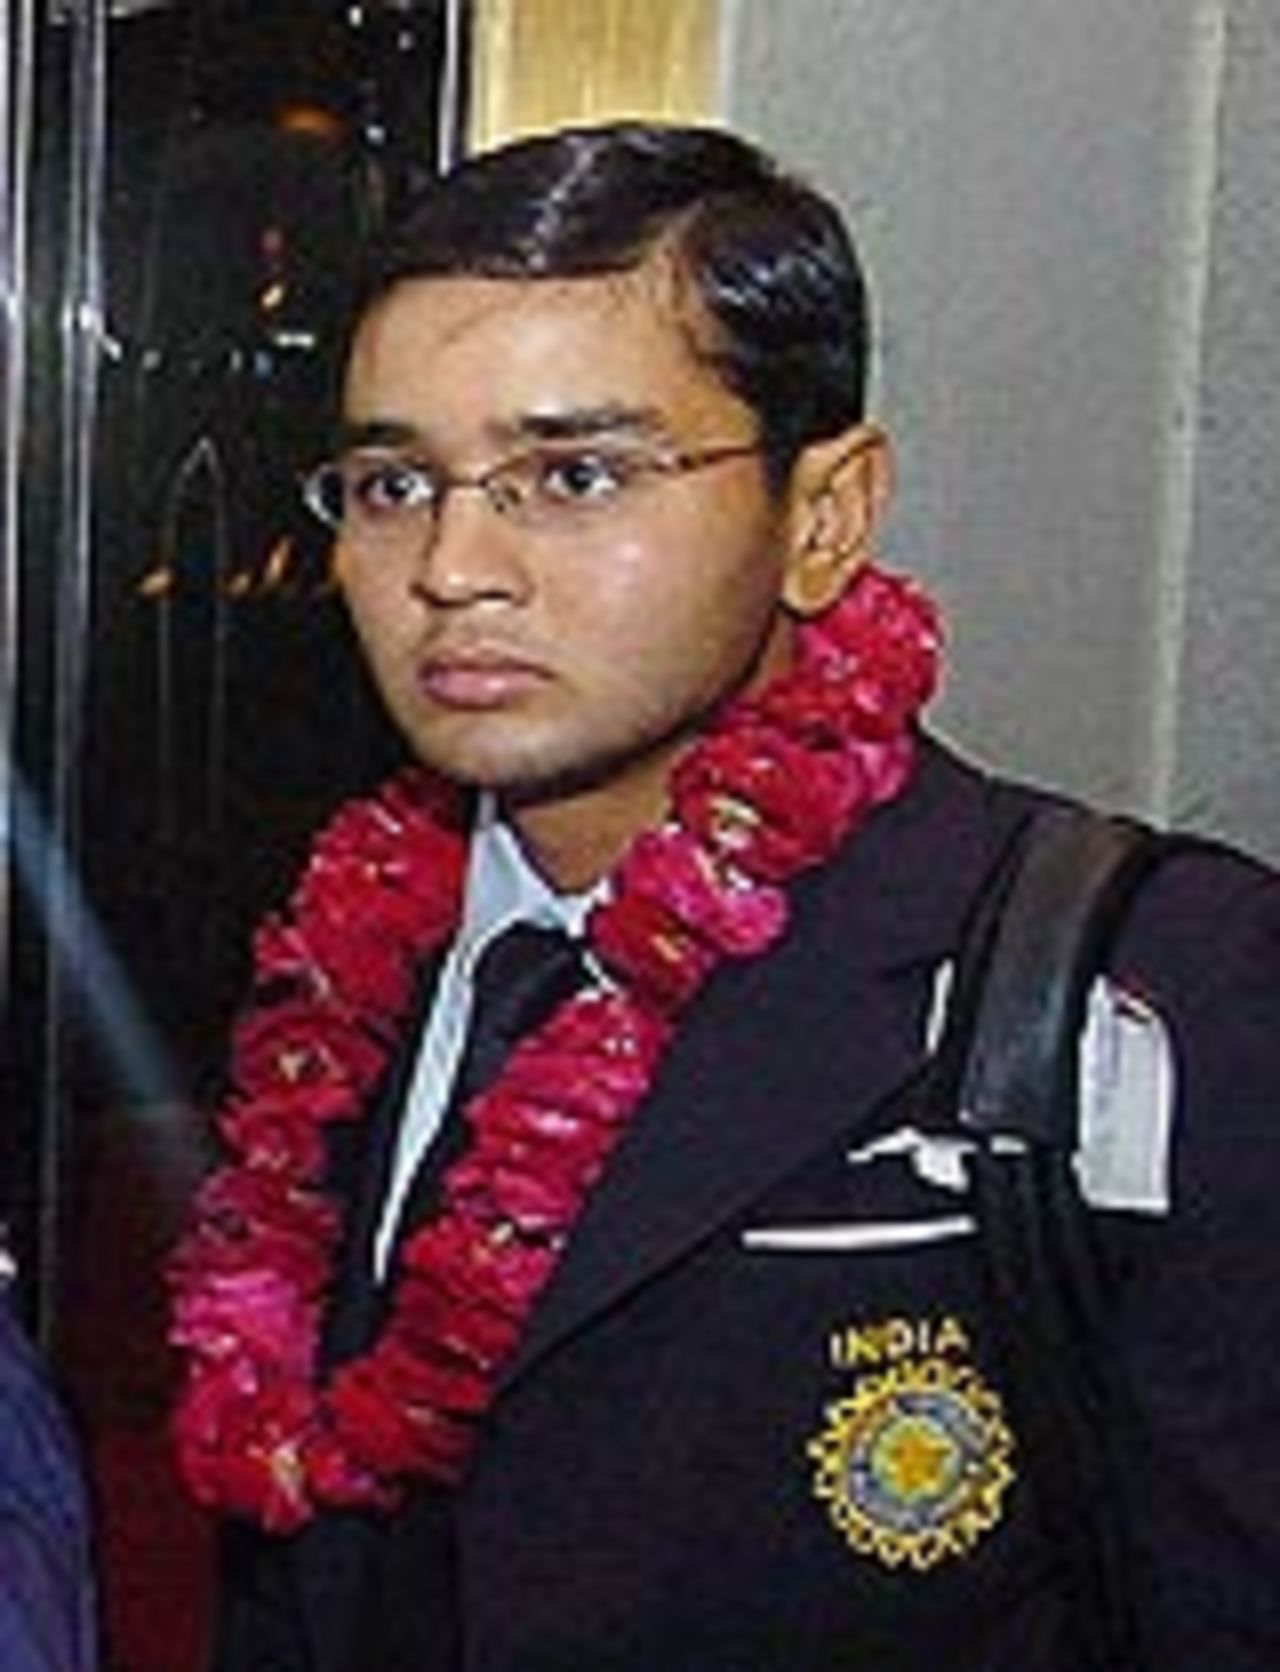 Parthiv Patel arrives in Pakistan, March 10, 2004